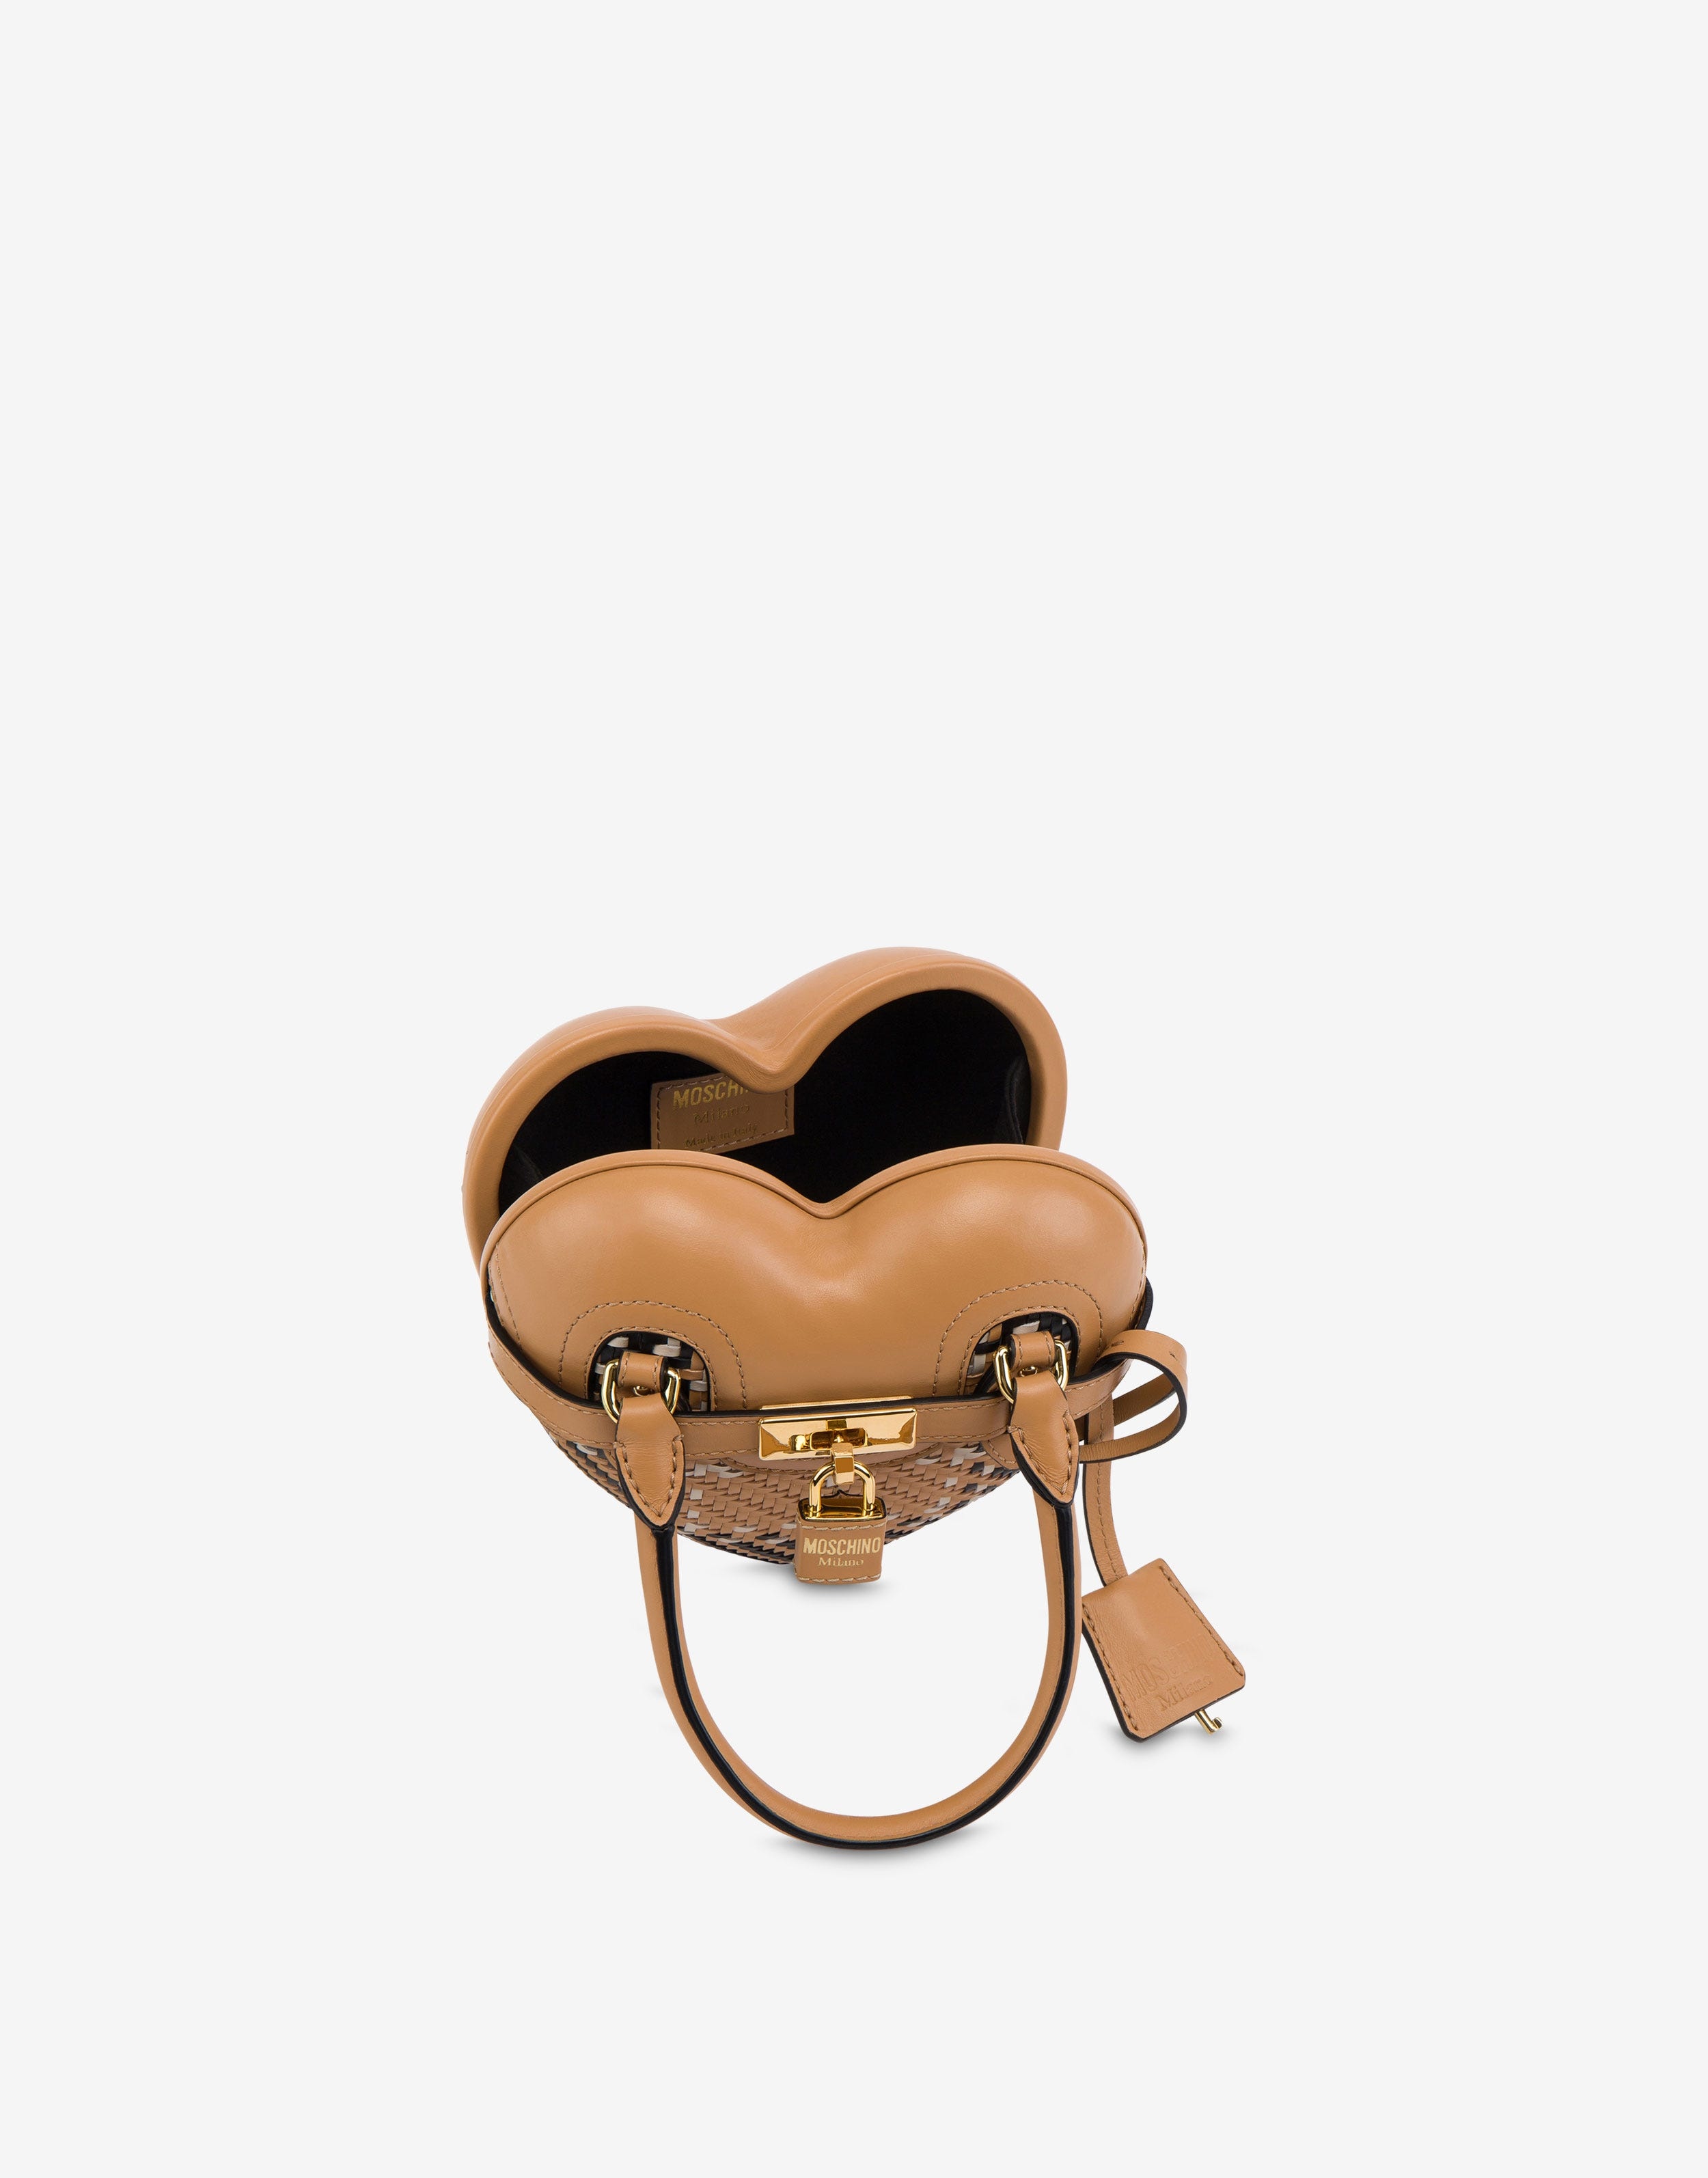 Moschino Heartbeat Bag